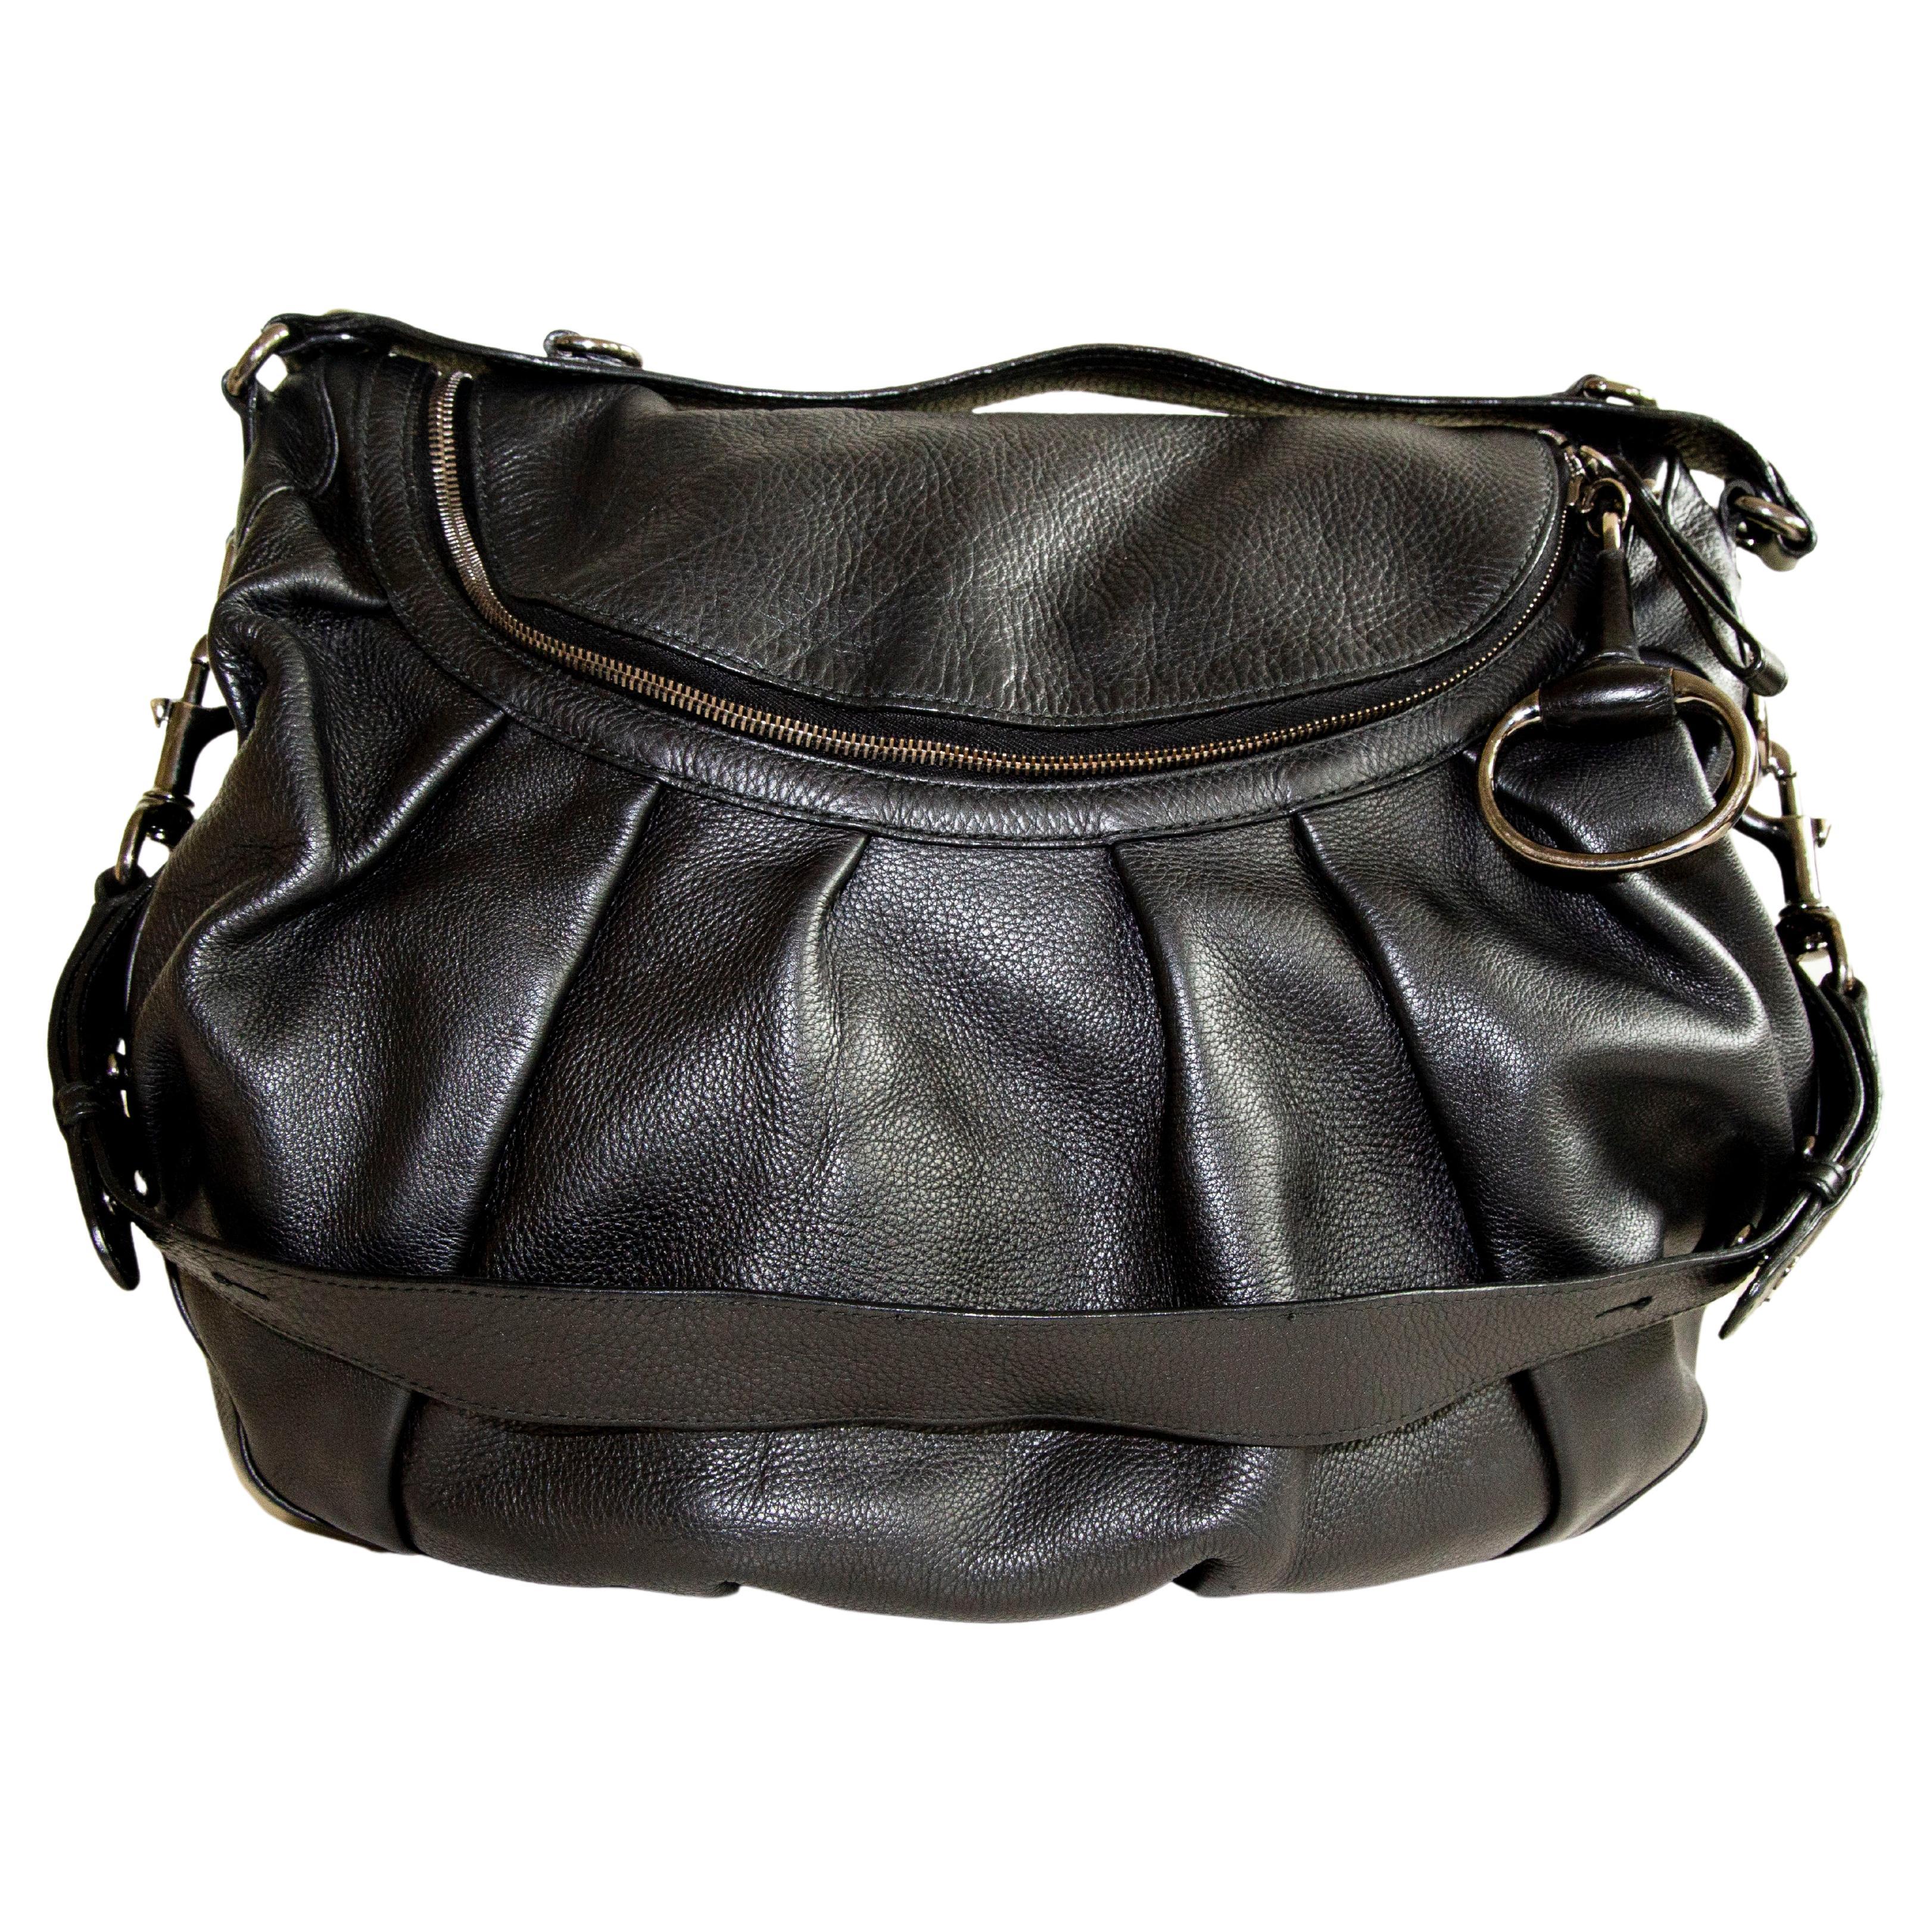 Gucci Icon Bit Medium Pebbled Leather Shoulder Bag in Black Leather For Sale